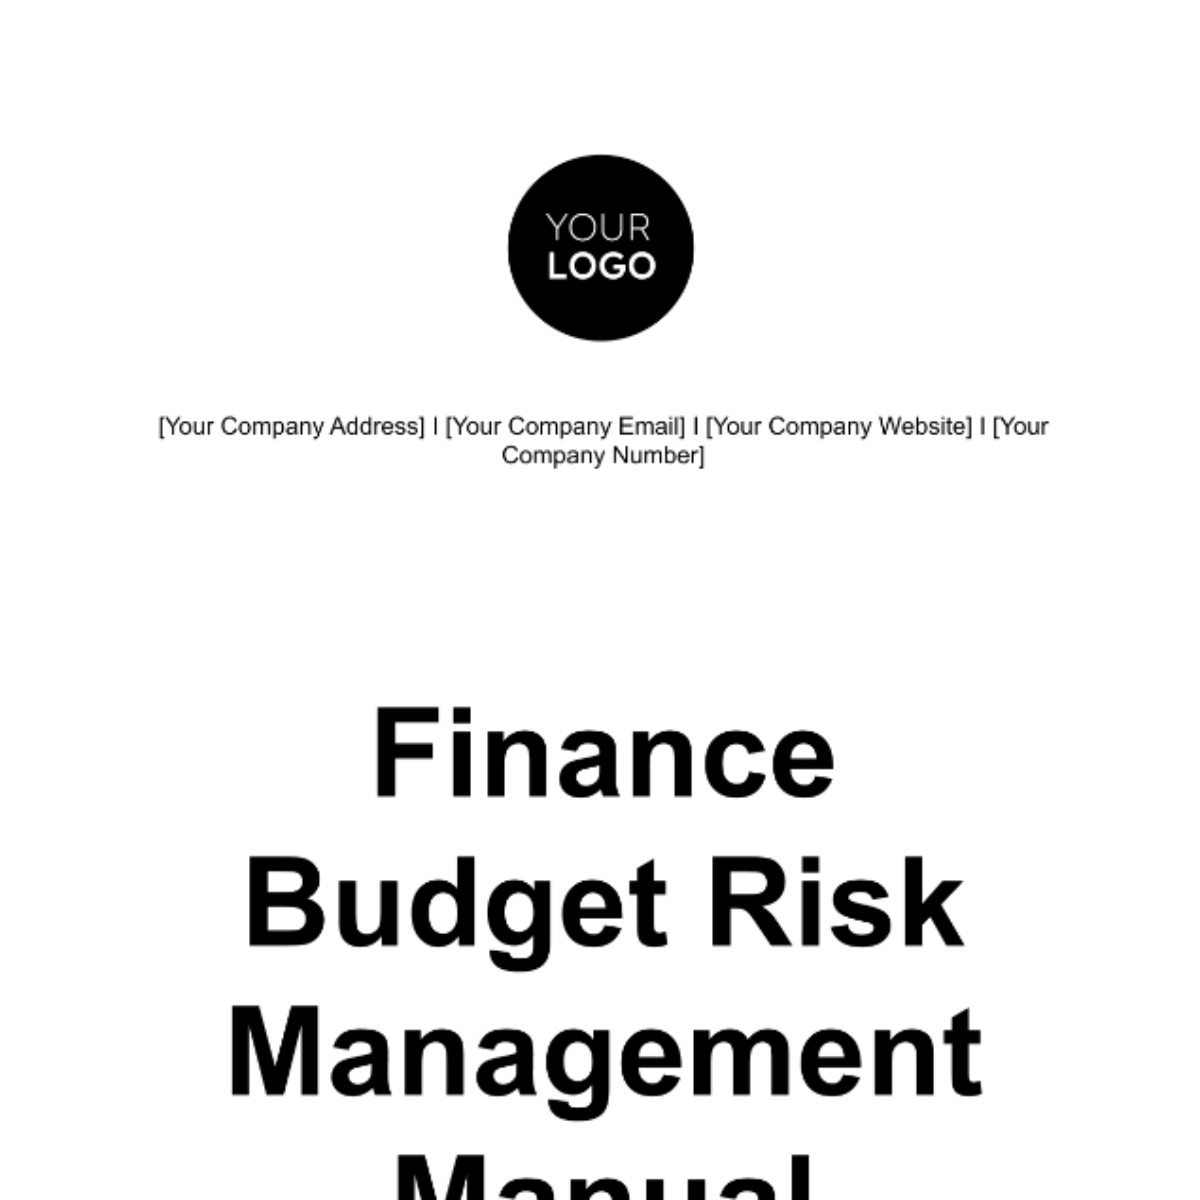 Finance Budget Risk Management Manual Template